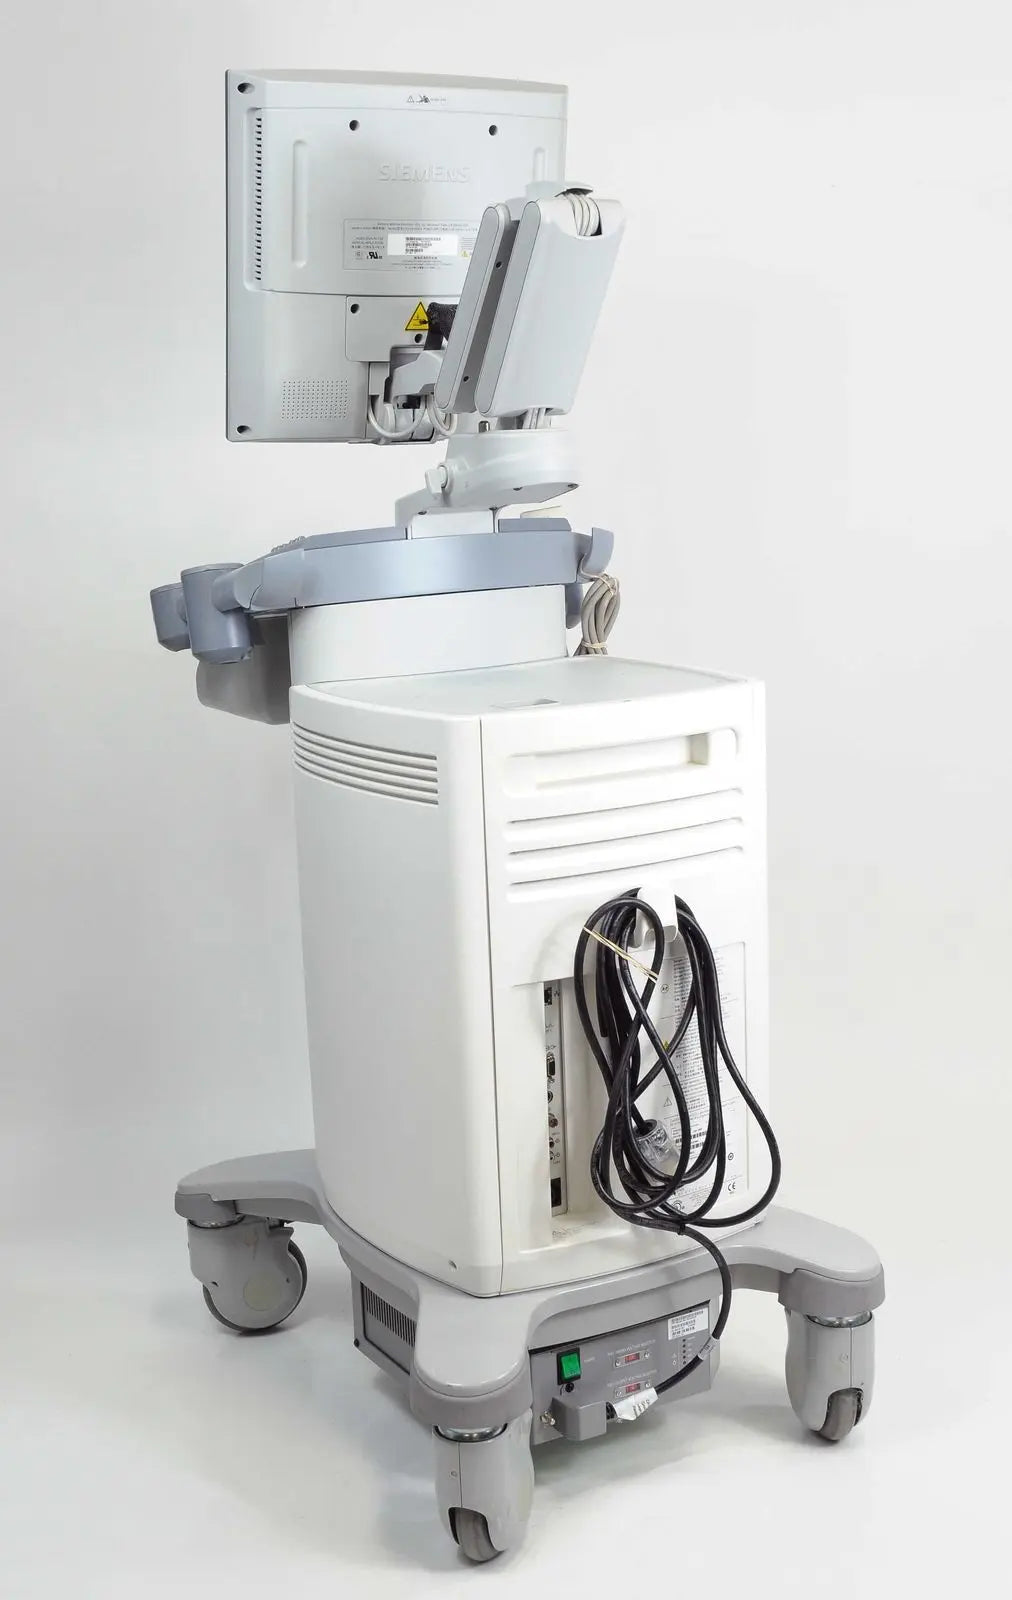 Siemens Acuson X150 Ultrasound Sonogram Pulsed Wave Doppler Imaging System X 150 DIAGNOSTIC ULTRASOUND MACHINES FOR SALE